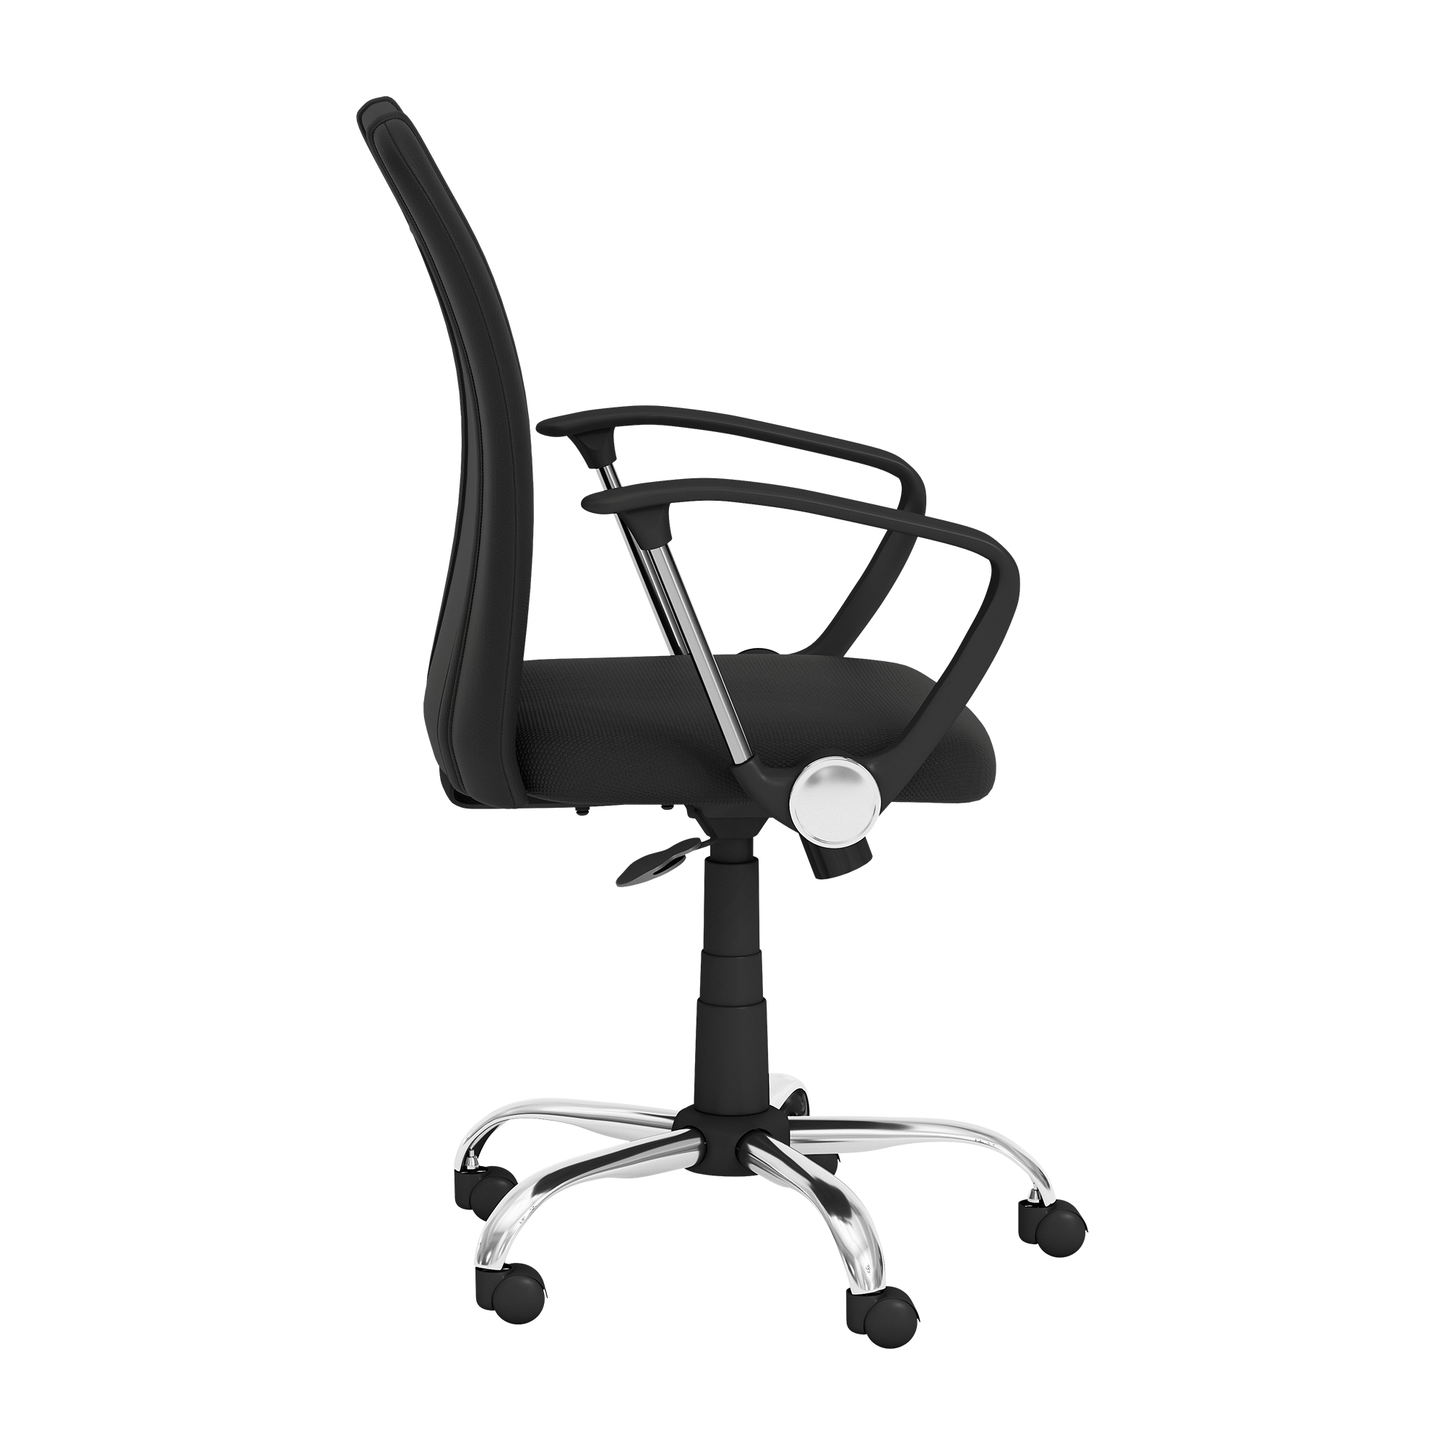 Curve Task Chair with Iguana Logo